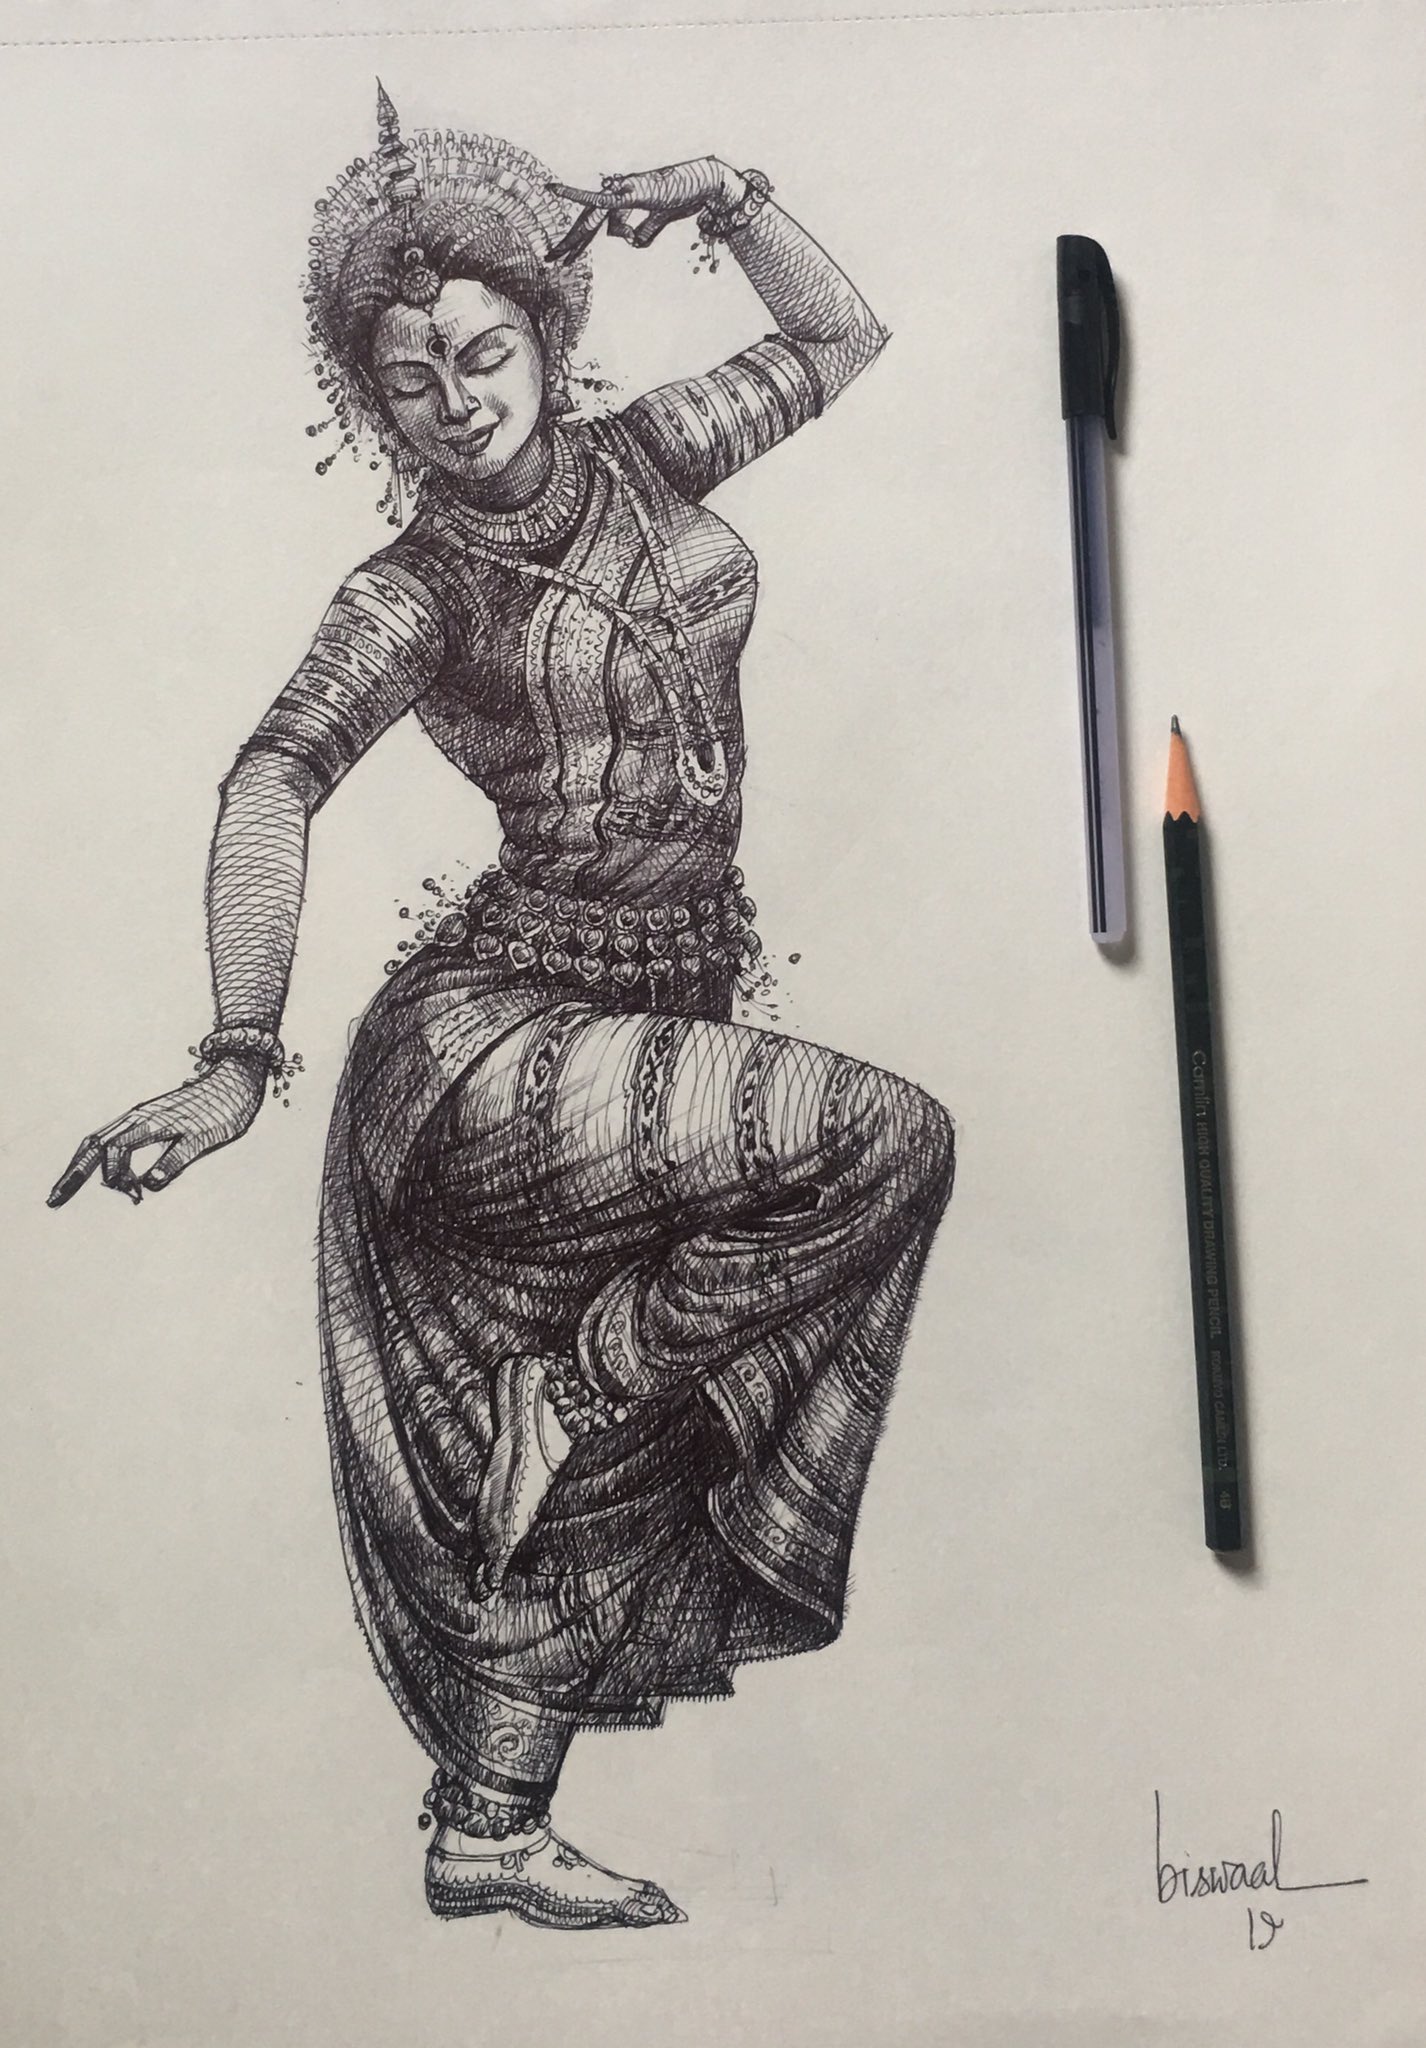 Classical dance drawing//Bharatanatyam//pencil drawing - YouTube